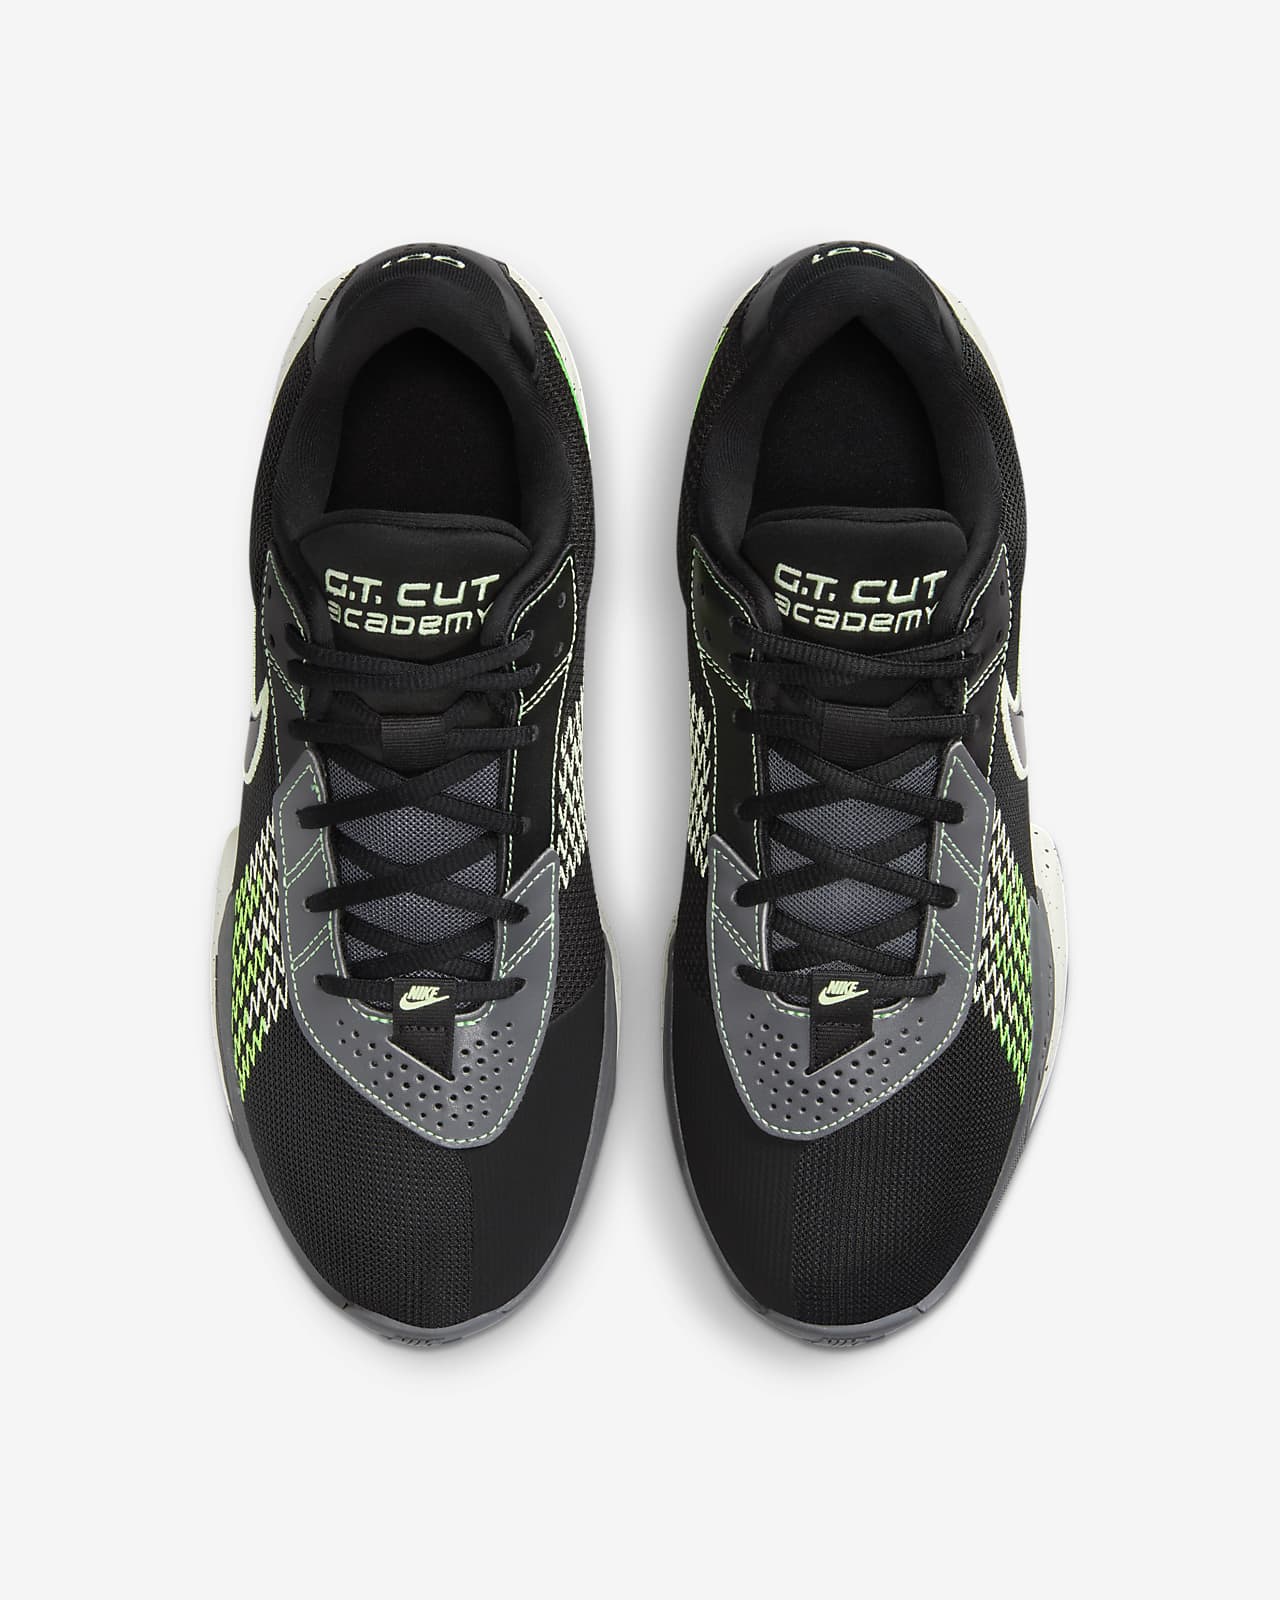 Nike G.T. Cut Academy Basketball Shoes